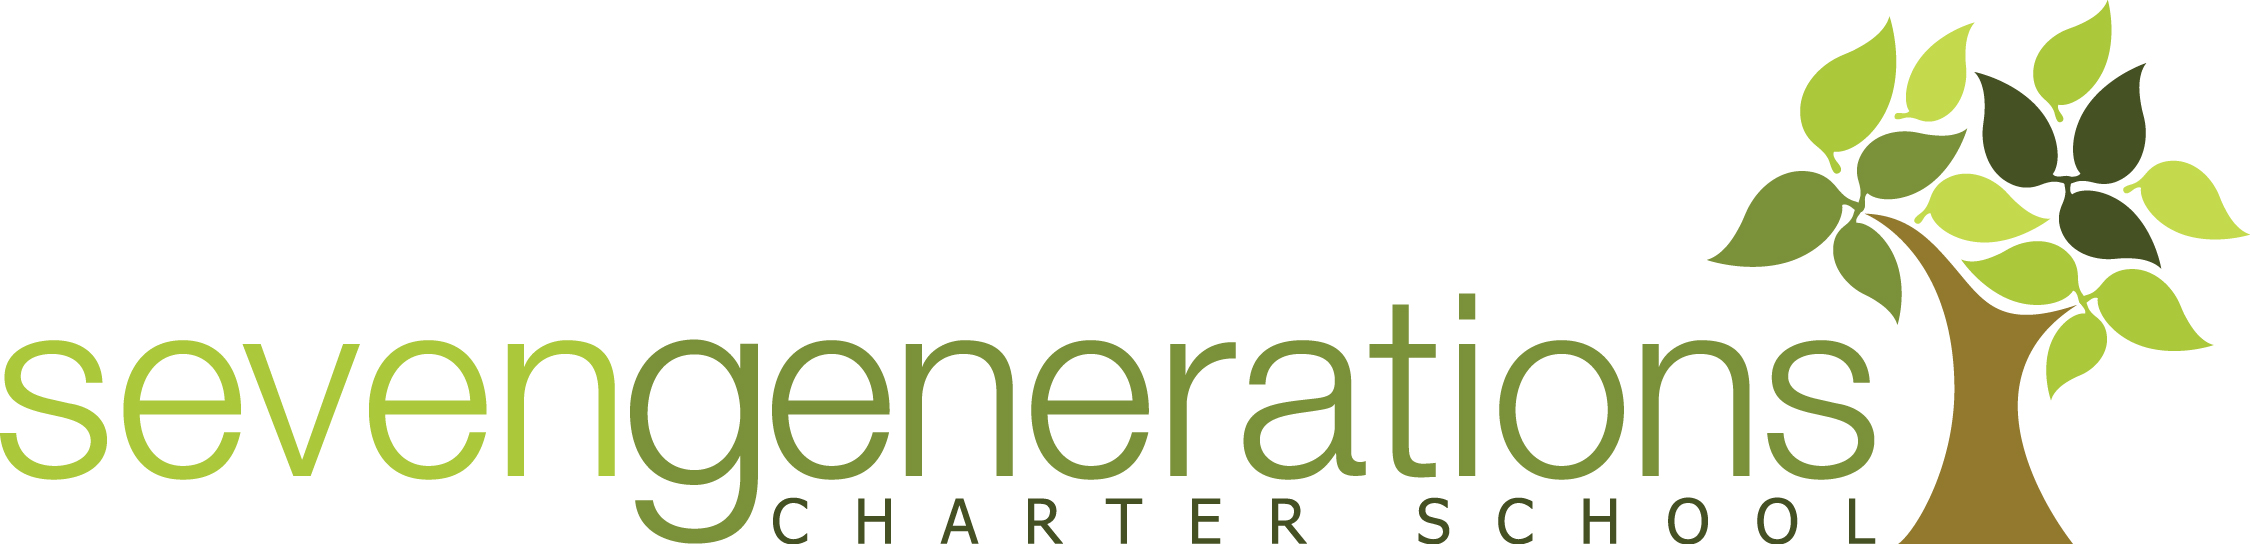 Seven Generations Charter School logo